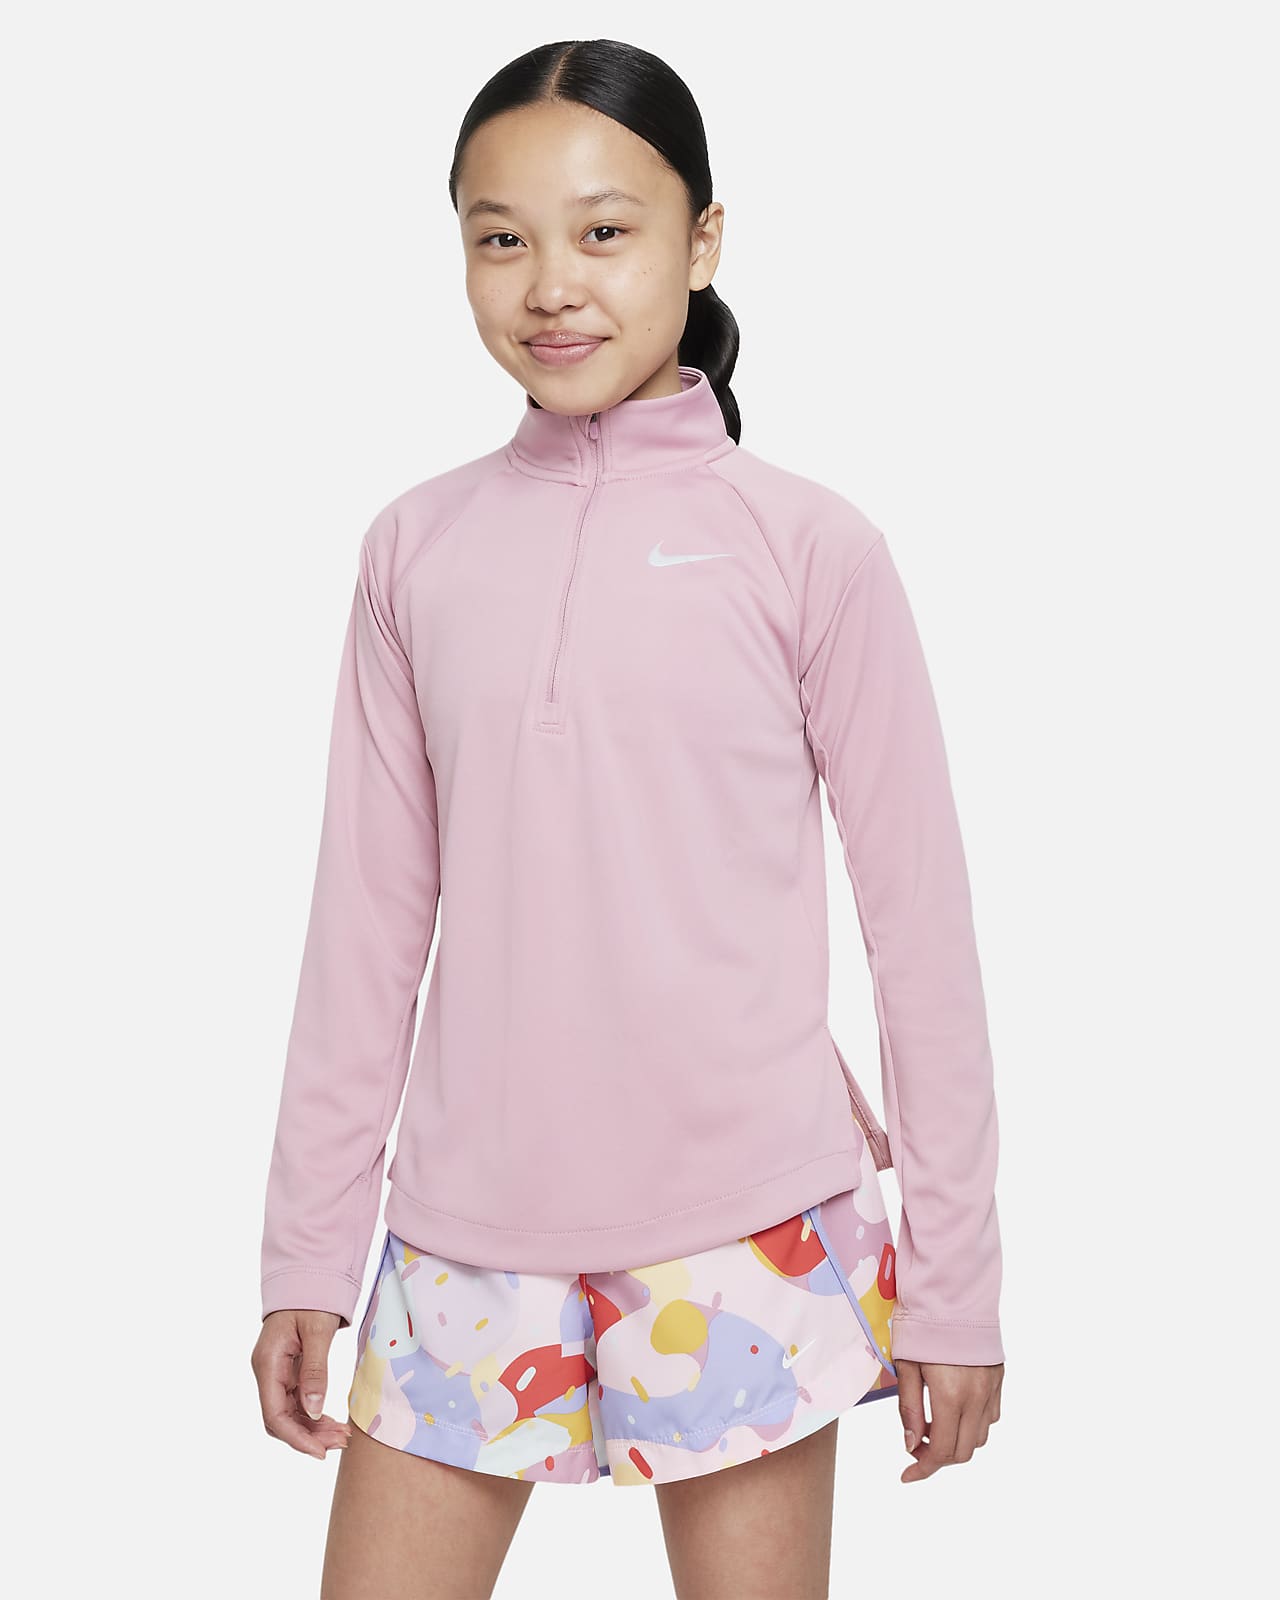 Nike Dri-FIT Hardlooptop met lange mouwen voor meisjes